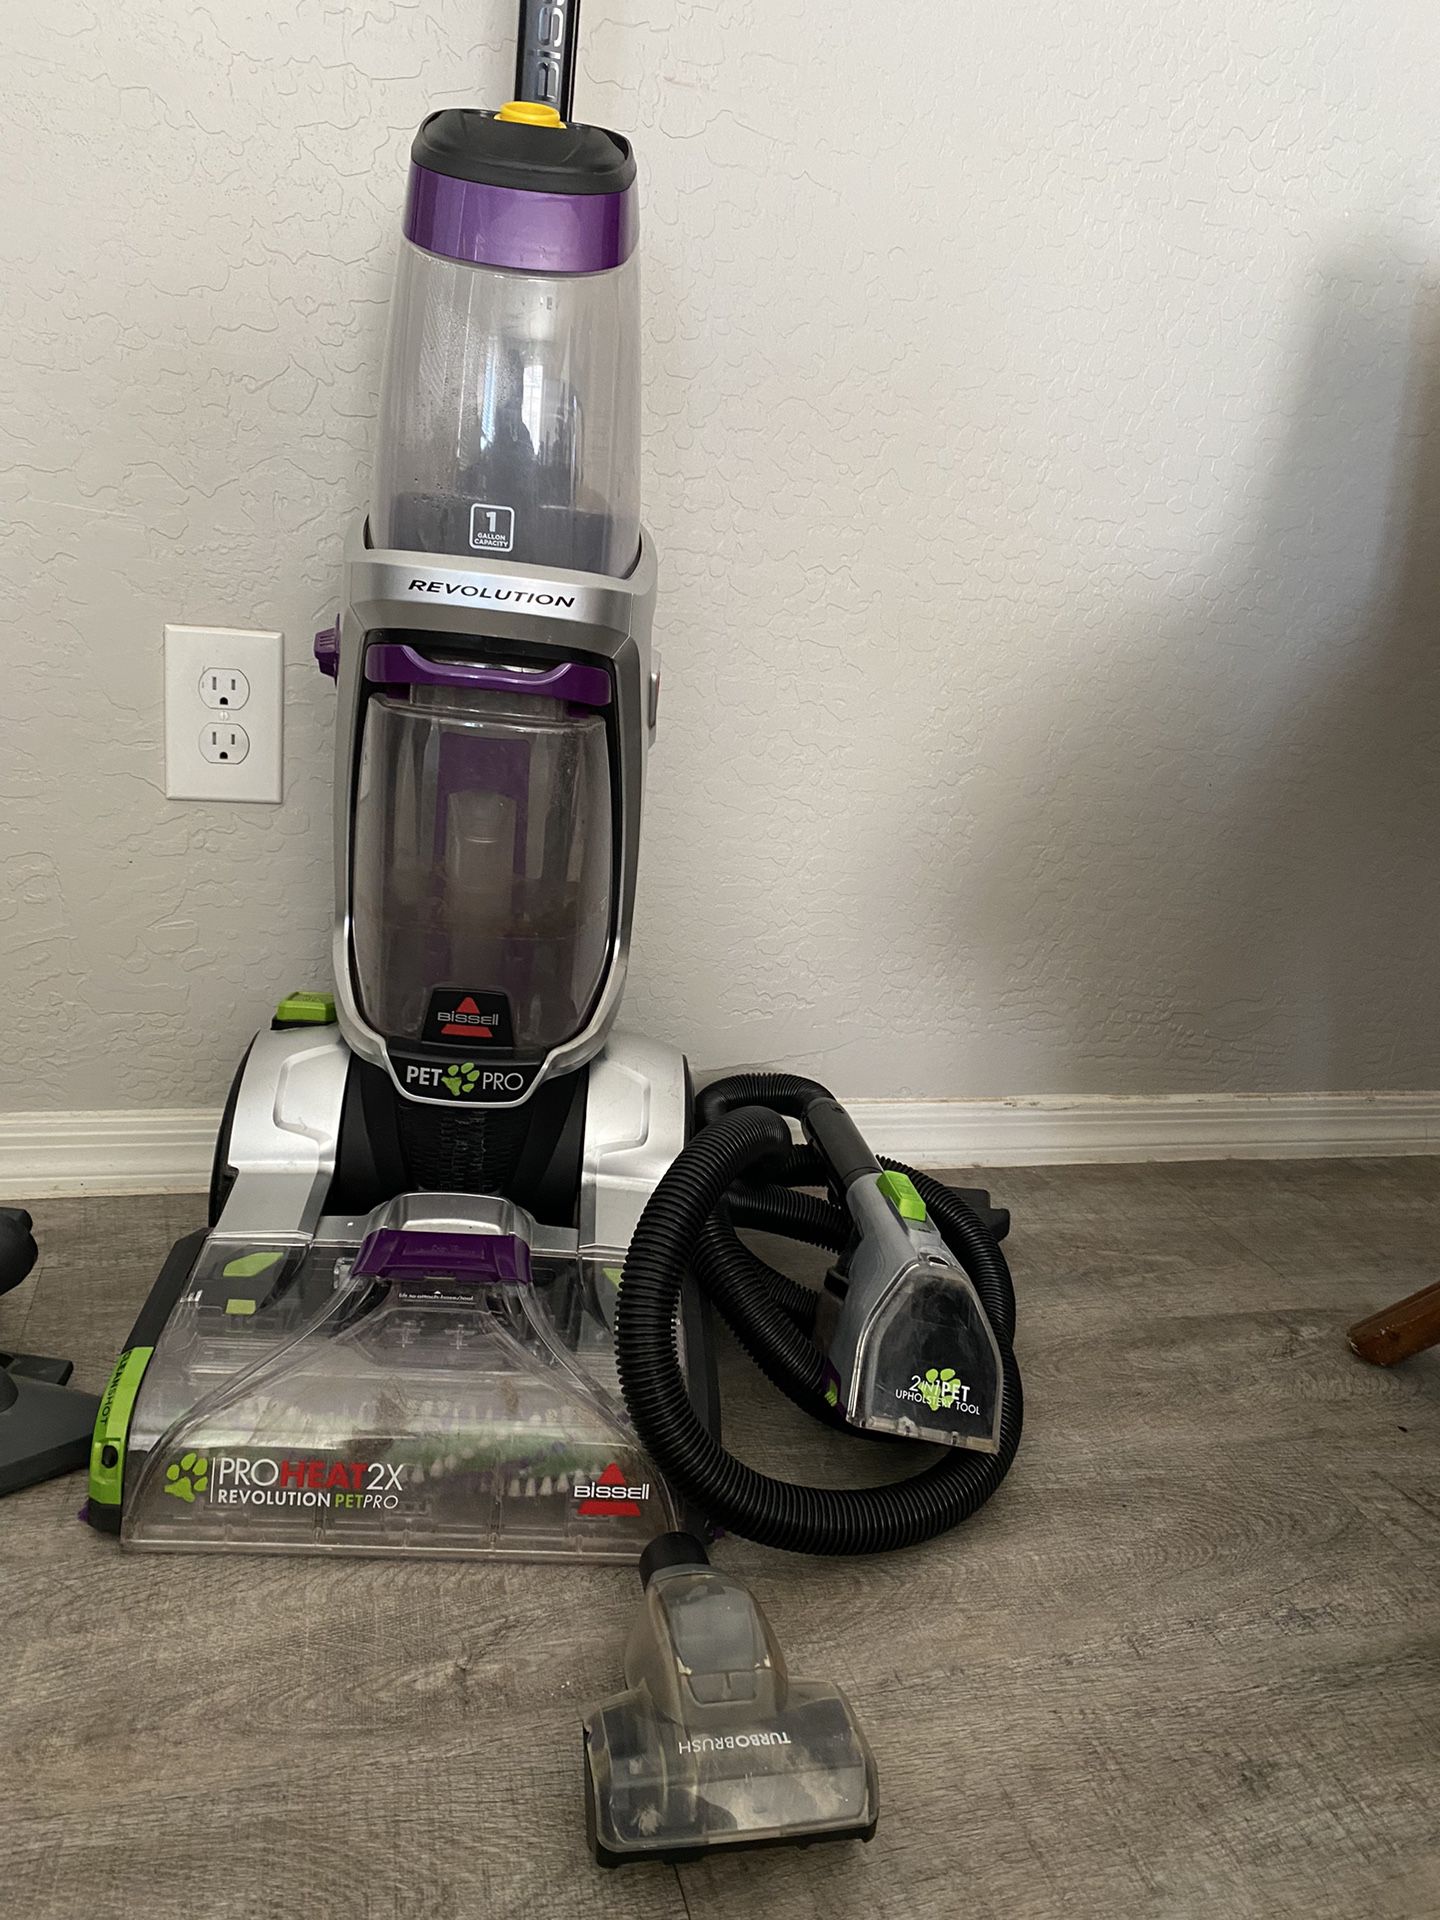 Bise Pro heat Revolution Pet pro Carpet cleaner 